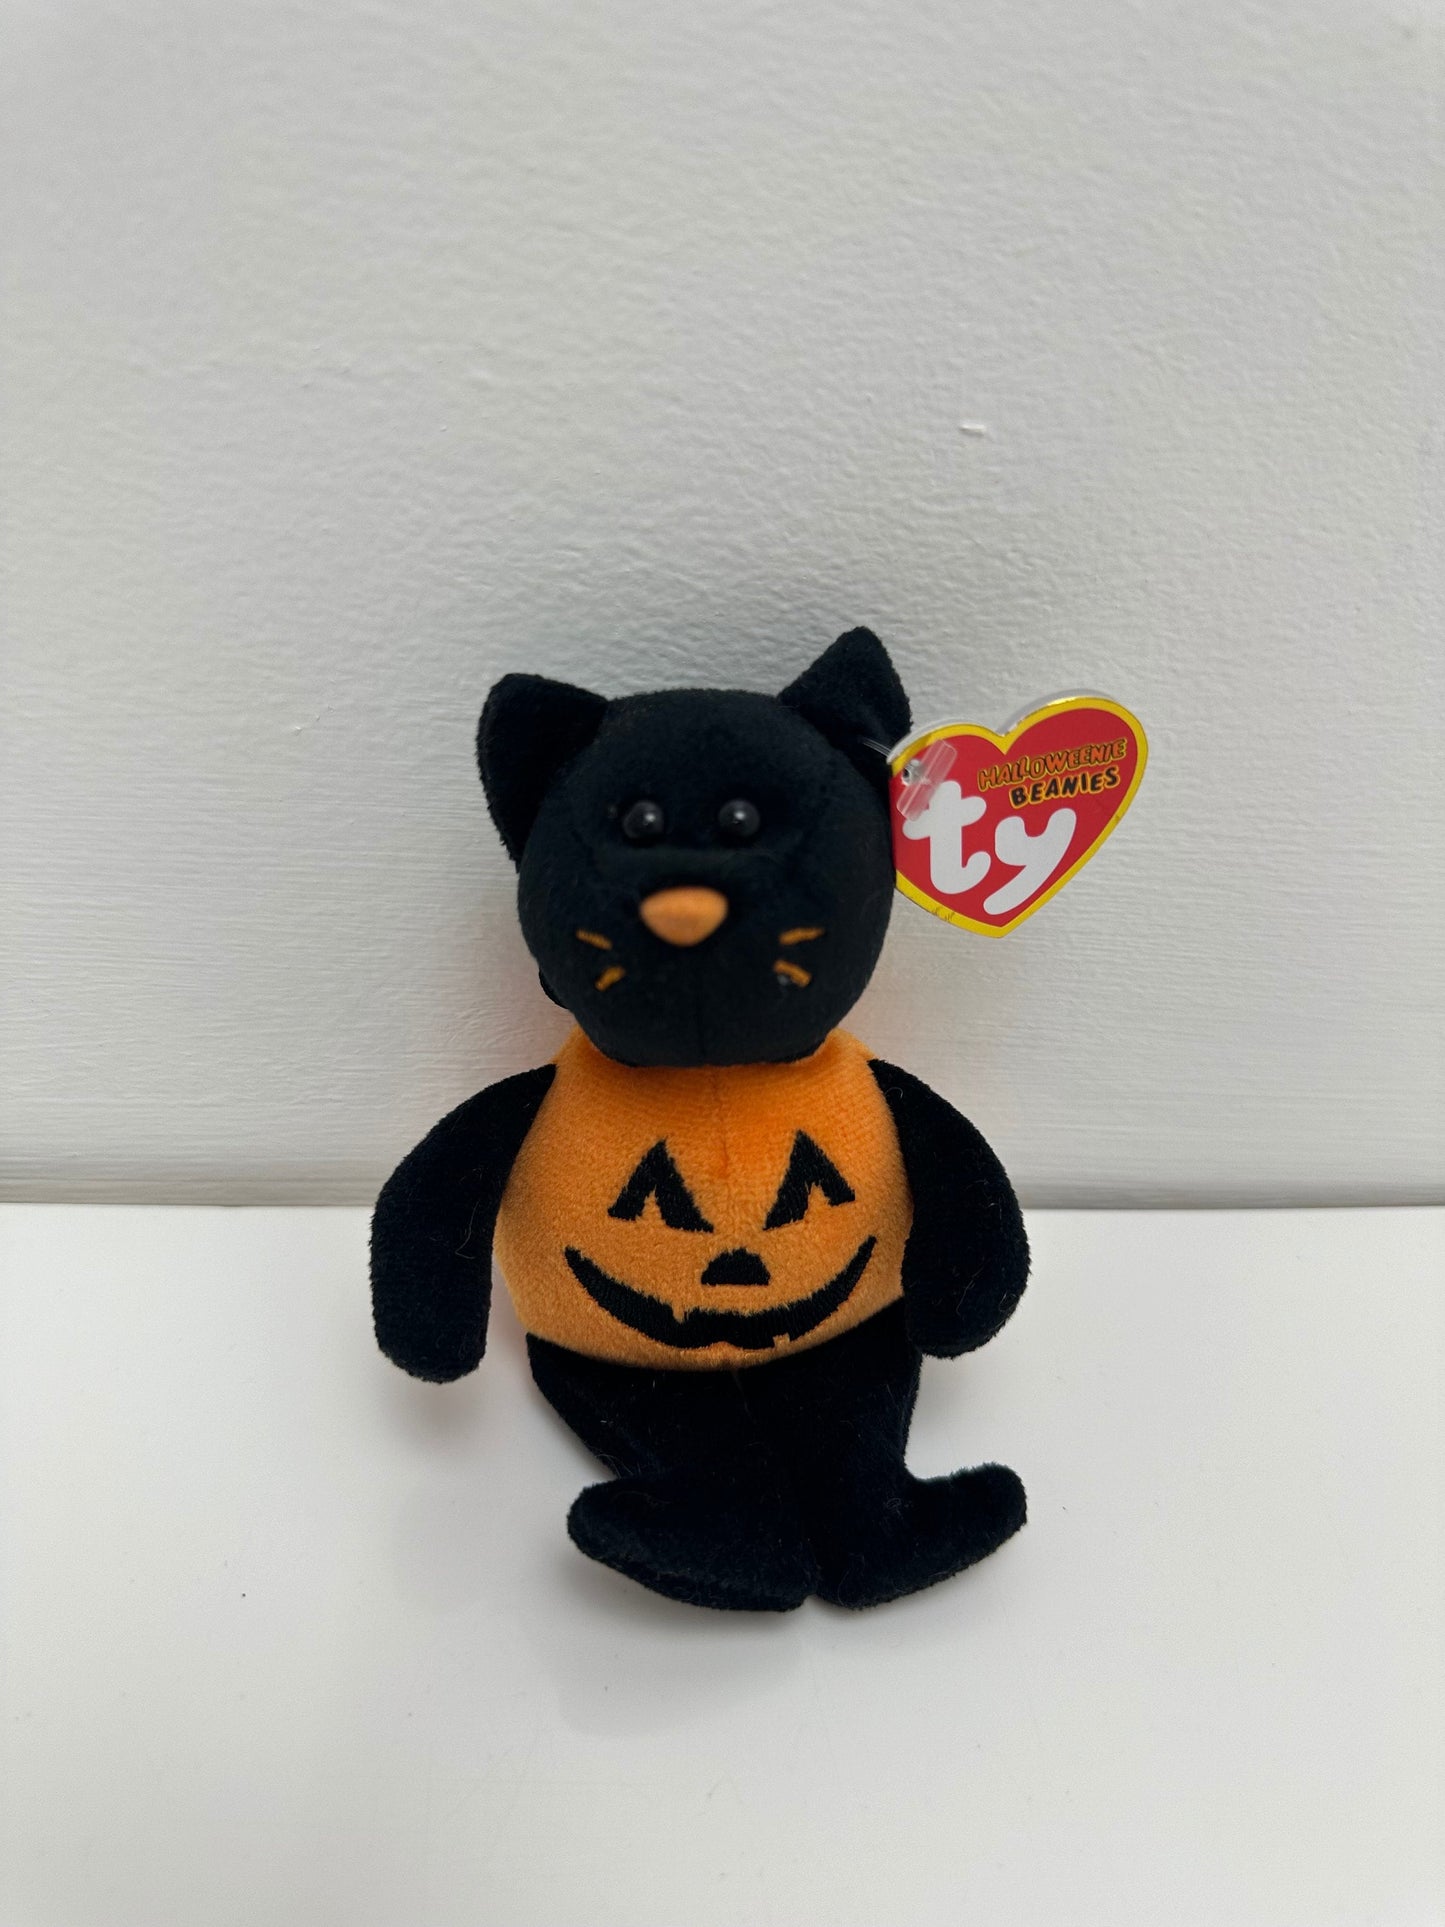 Ty Halloweenie Beanies “Catkin” the Pumpkin Cat - Halloweenie Beanie (4 inch)